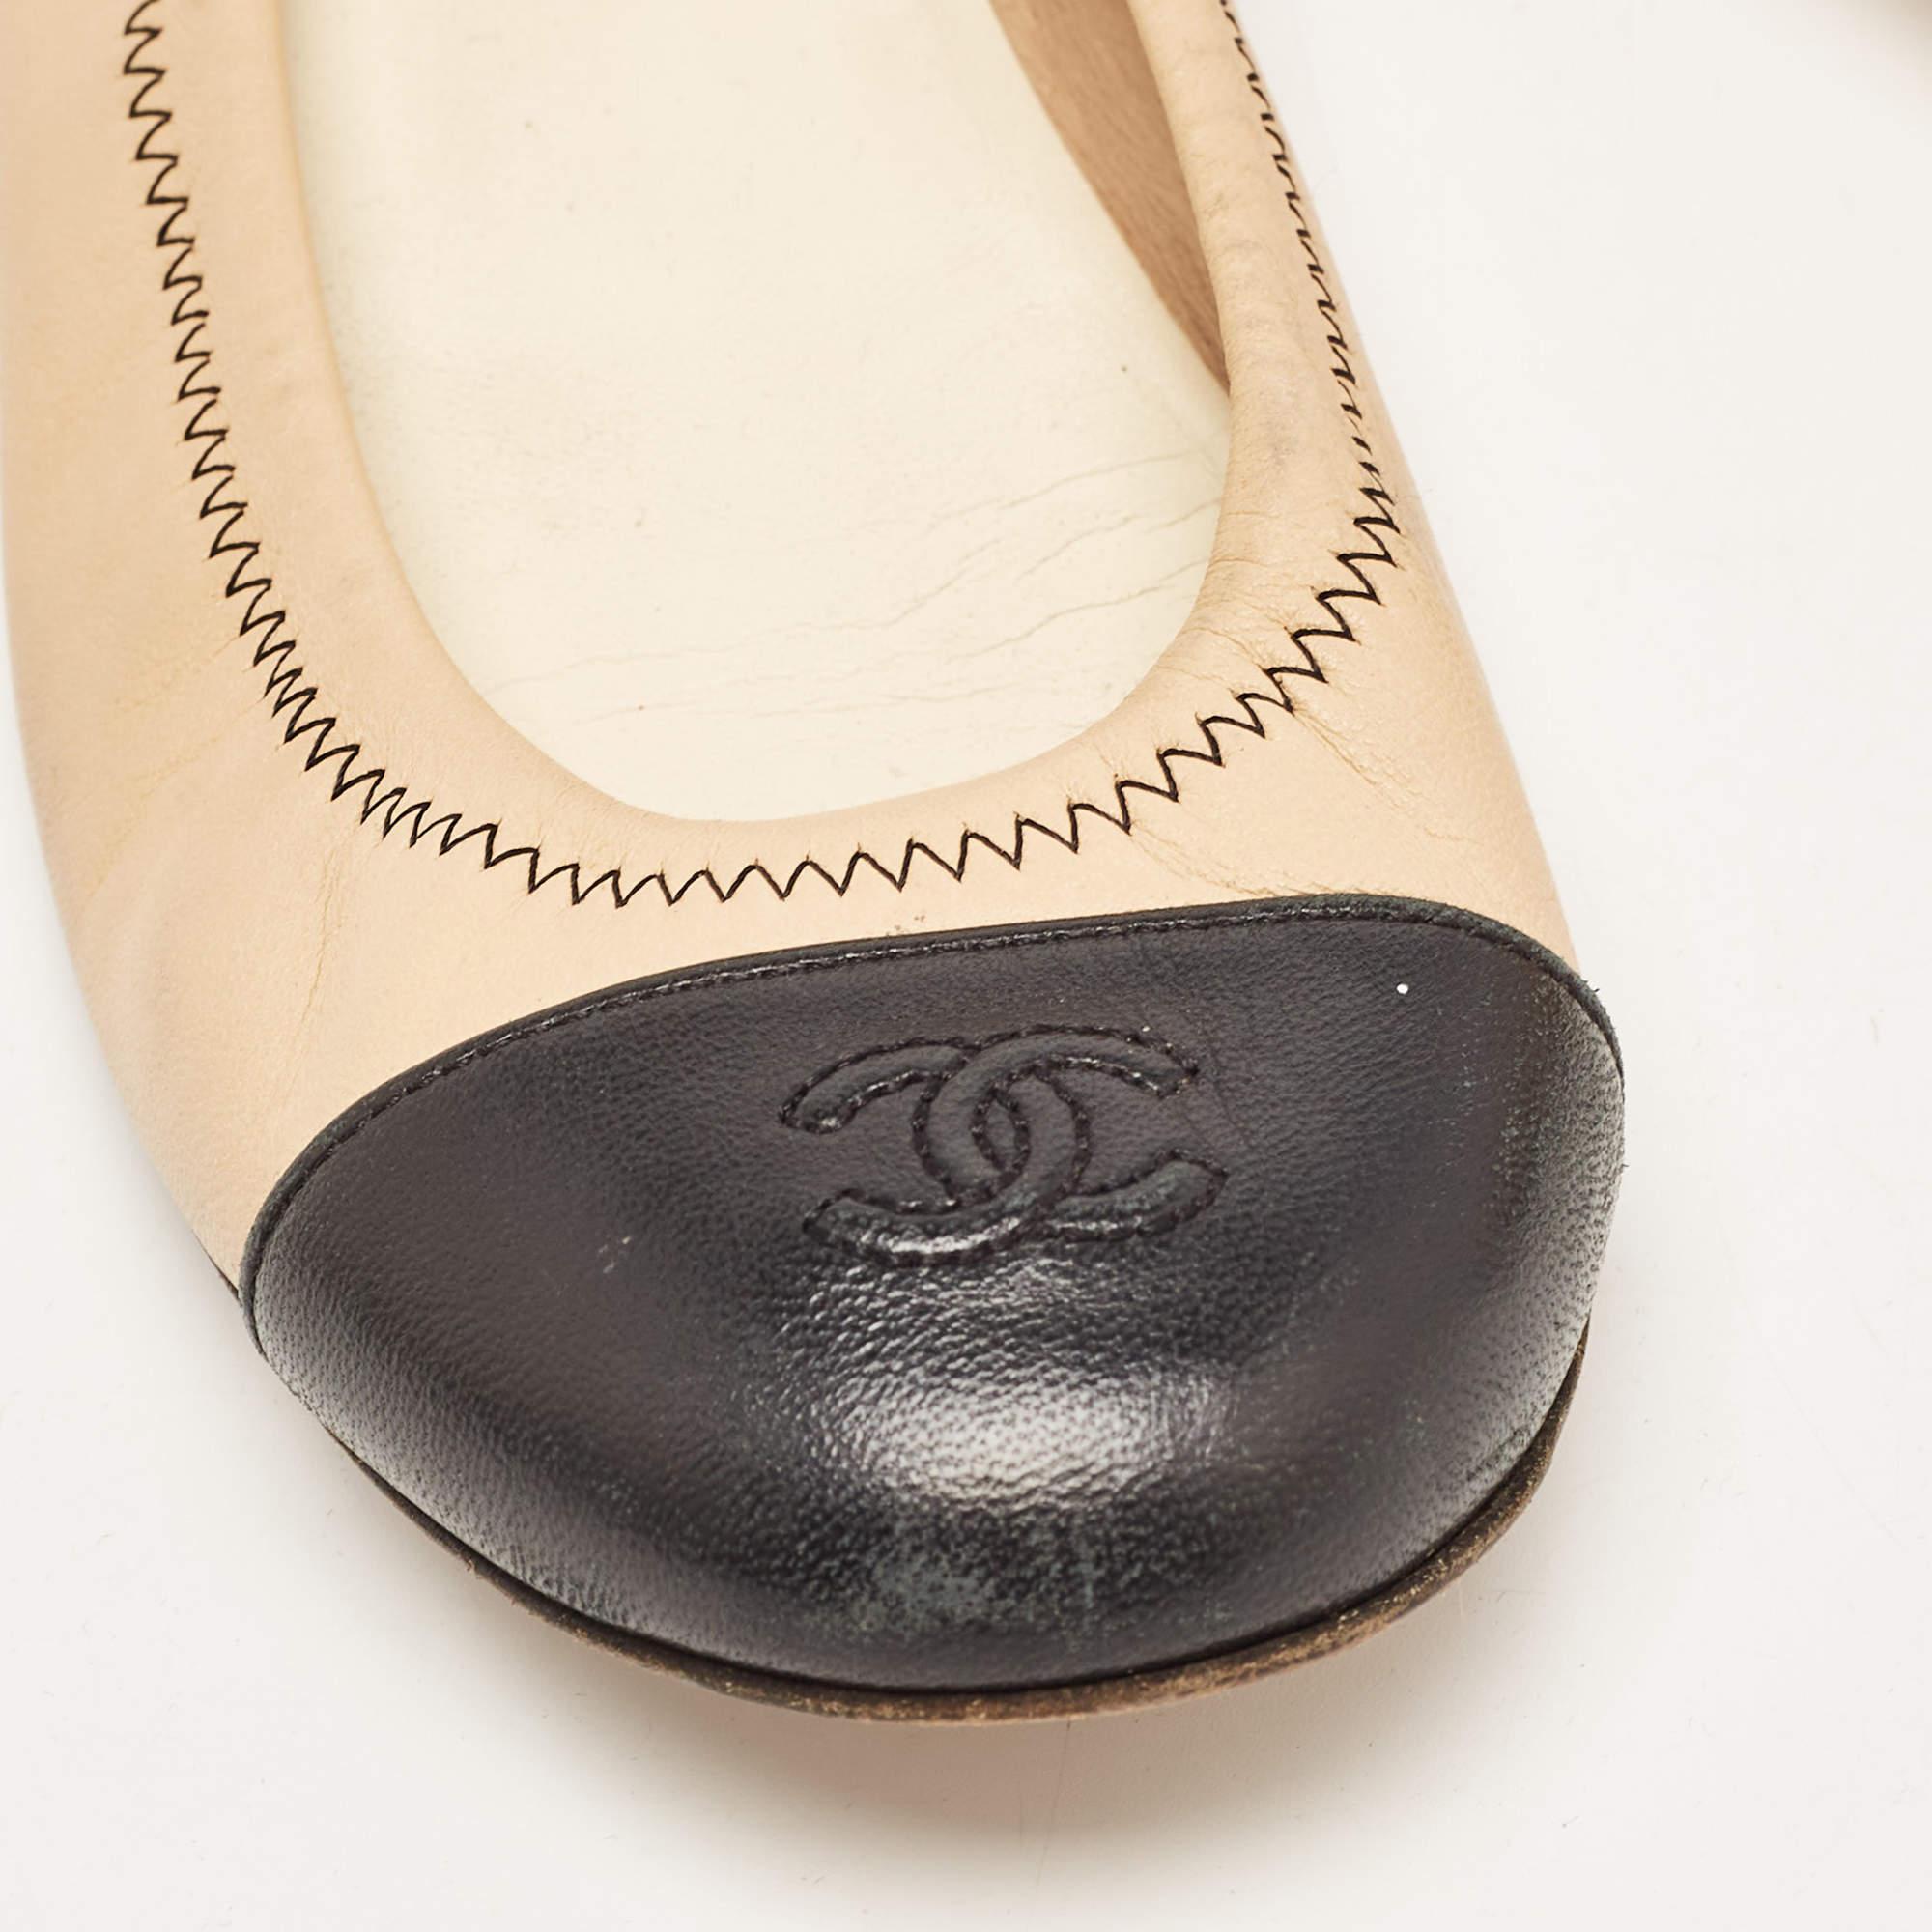 Chanel Beige/Black Leather CC Ballet Flats Size 36.5 1